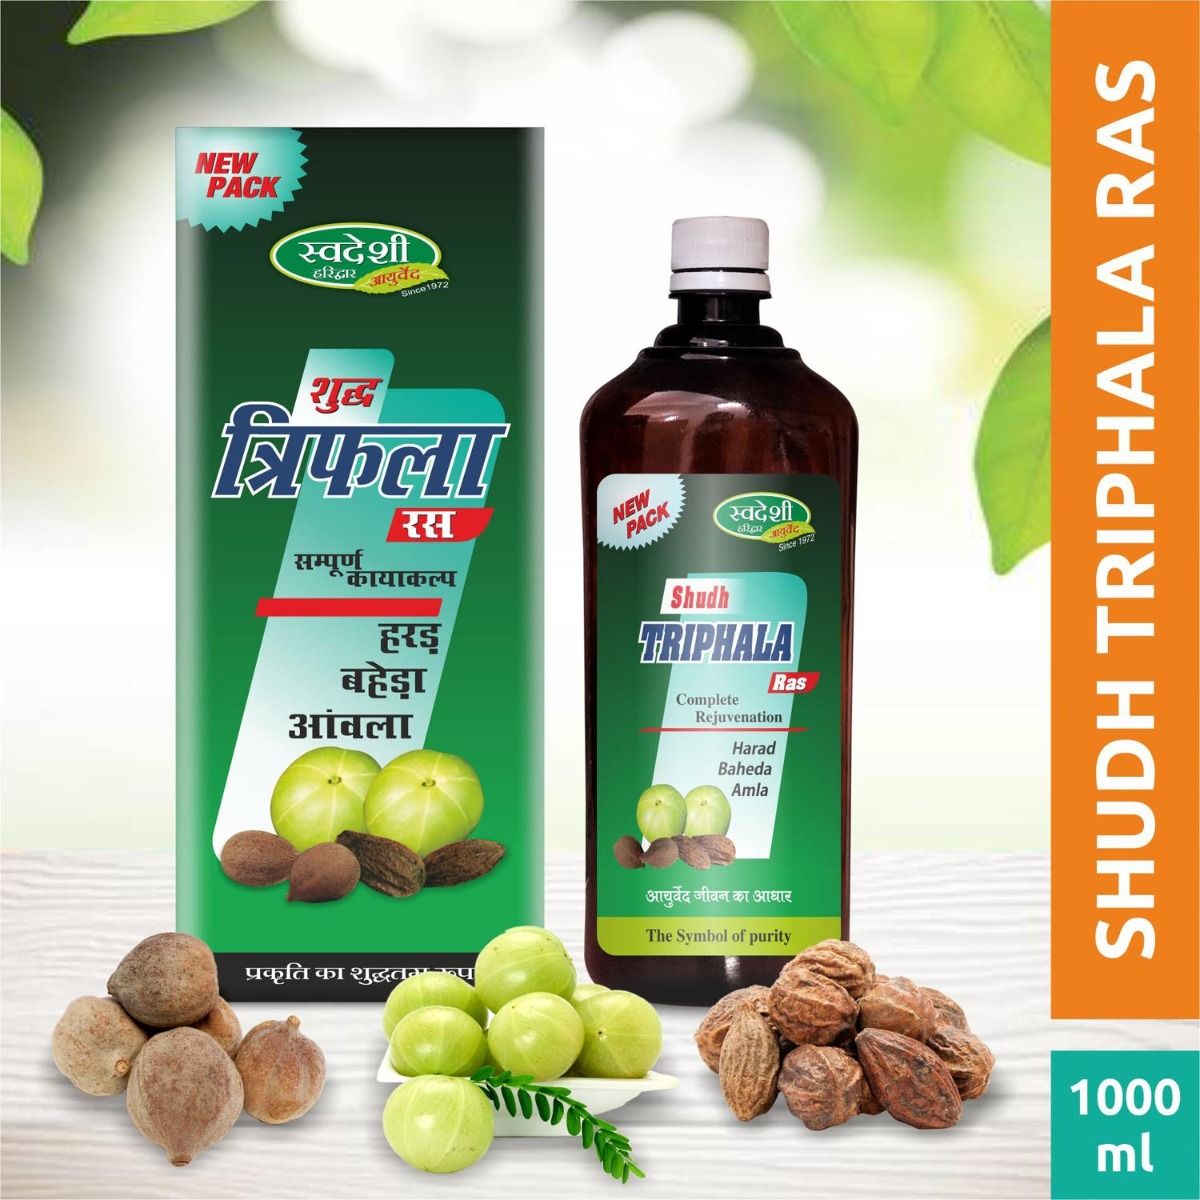 Buy Swadeshi Shudh Triphala Ras Juice, 1000 ml Online